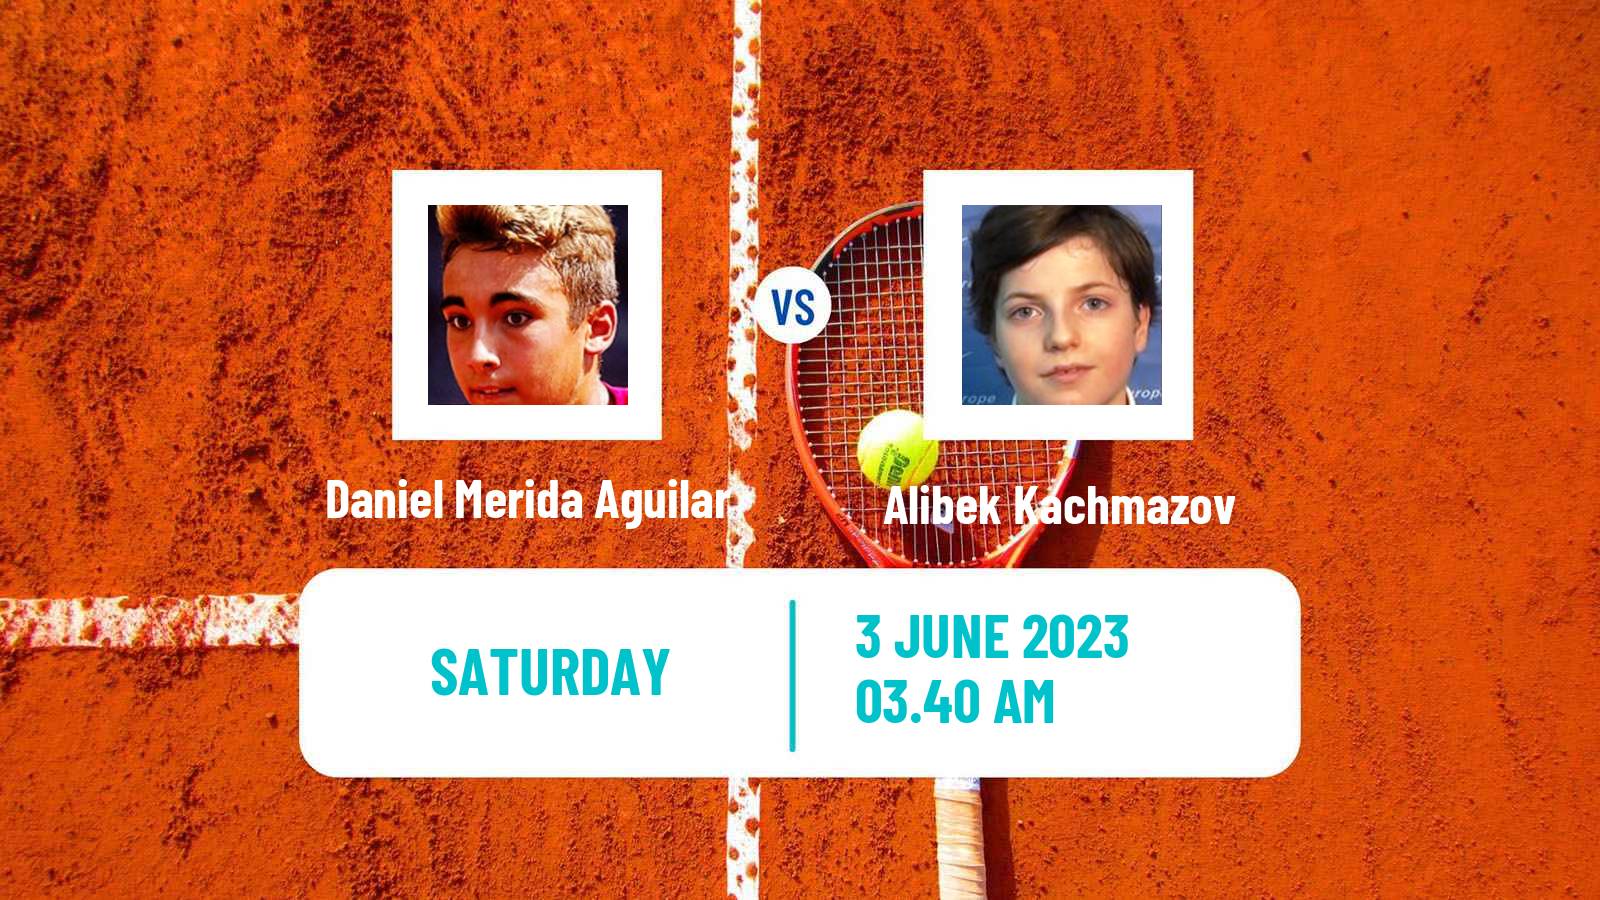 Tennis ITF M25 La Nucia Men Daniel Merida Aguilar - Alibek Kachmazov